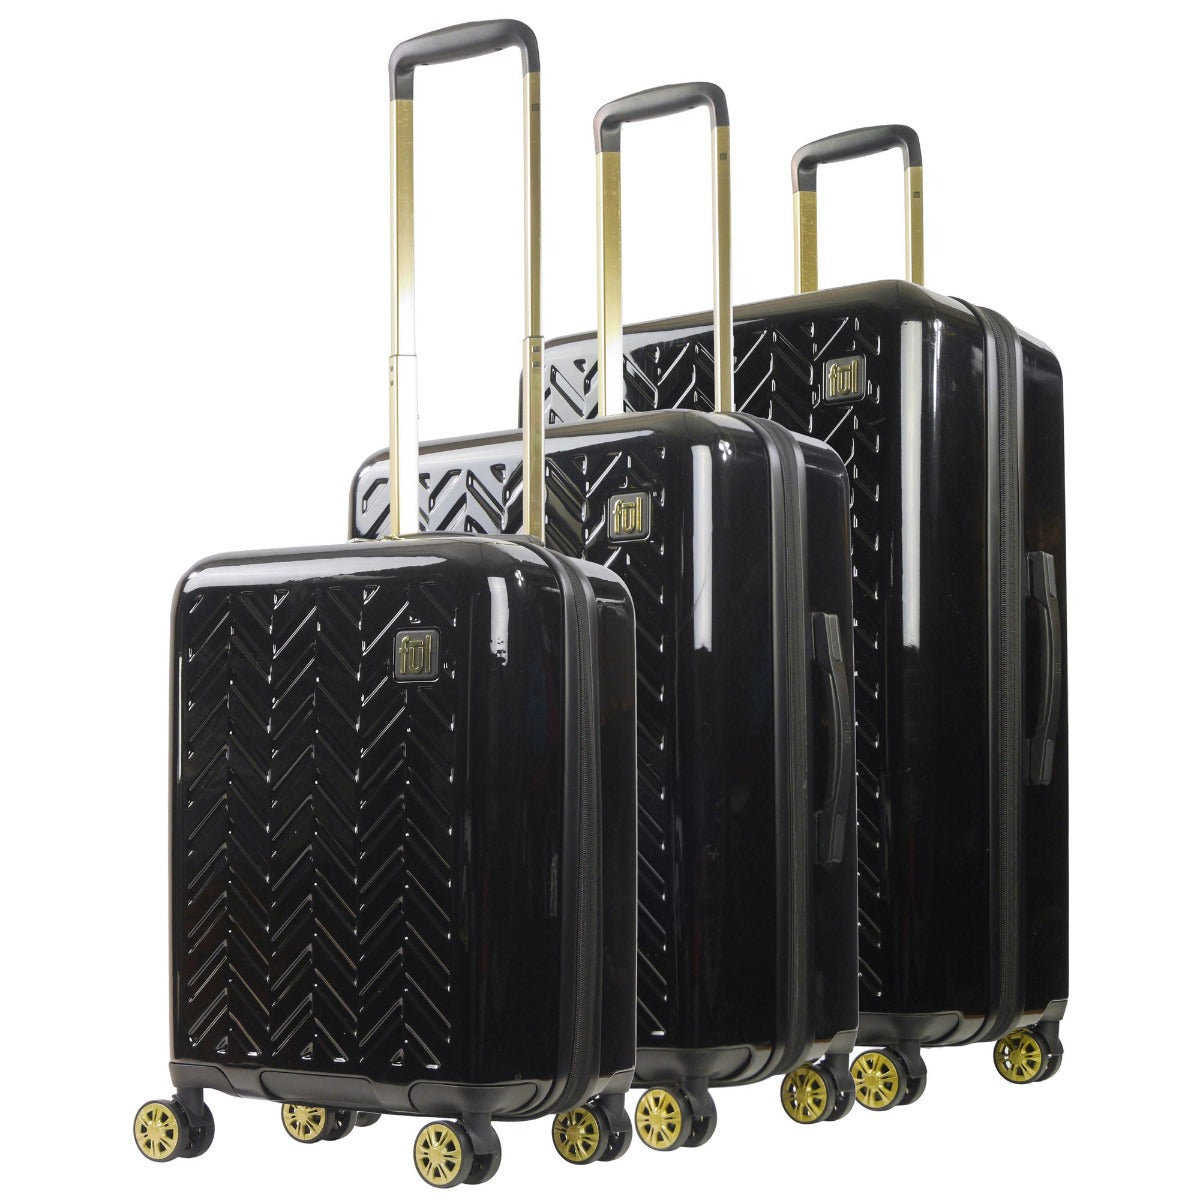 Ful Groove hardside spinner suitcase 3 Pc black luggage set 22" 27" 31"